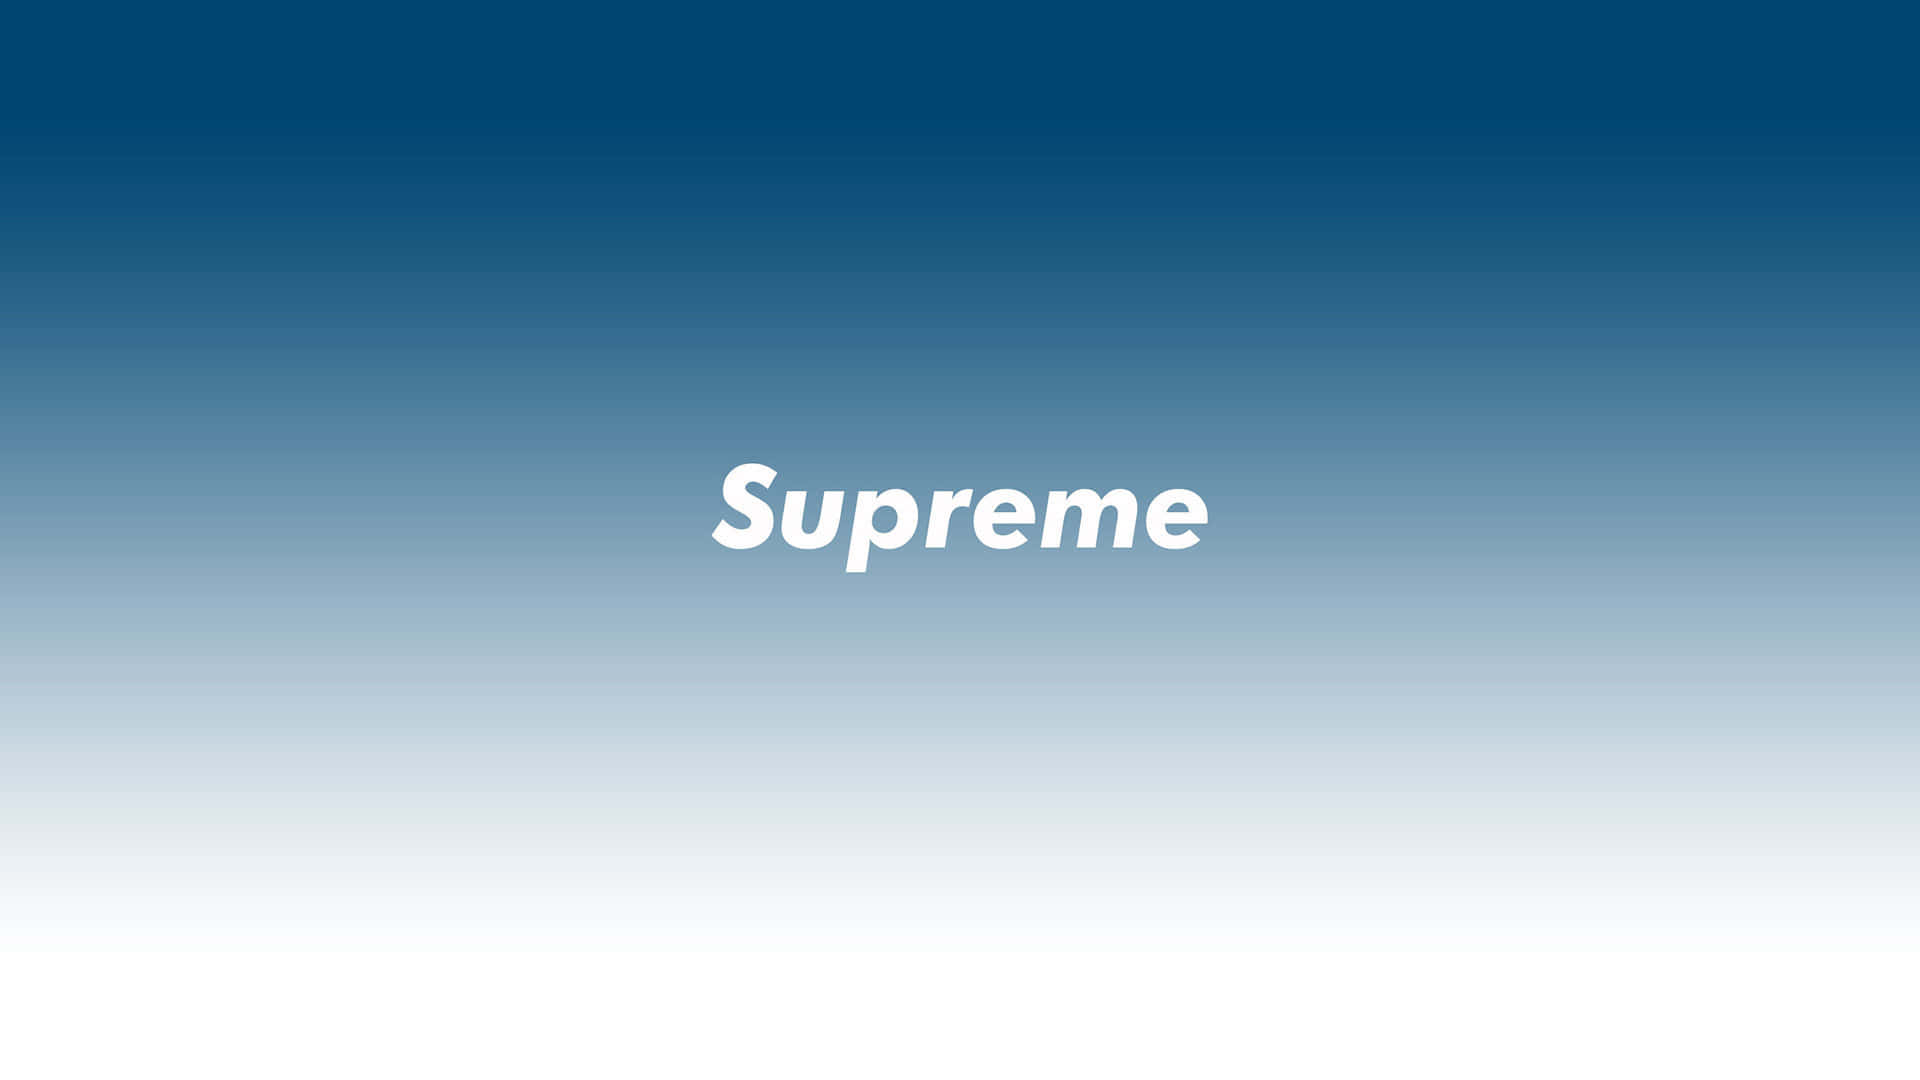 Supreme - Wikipedia Background